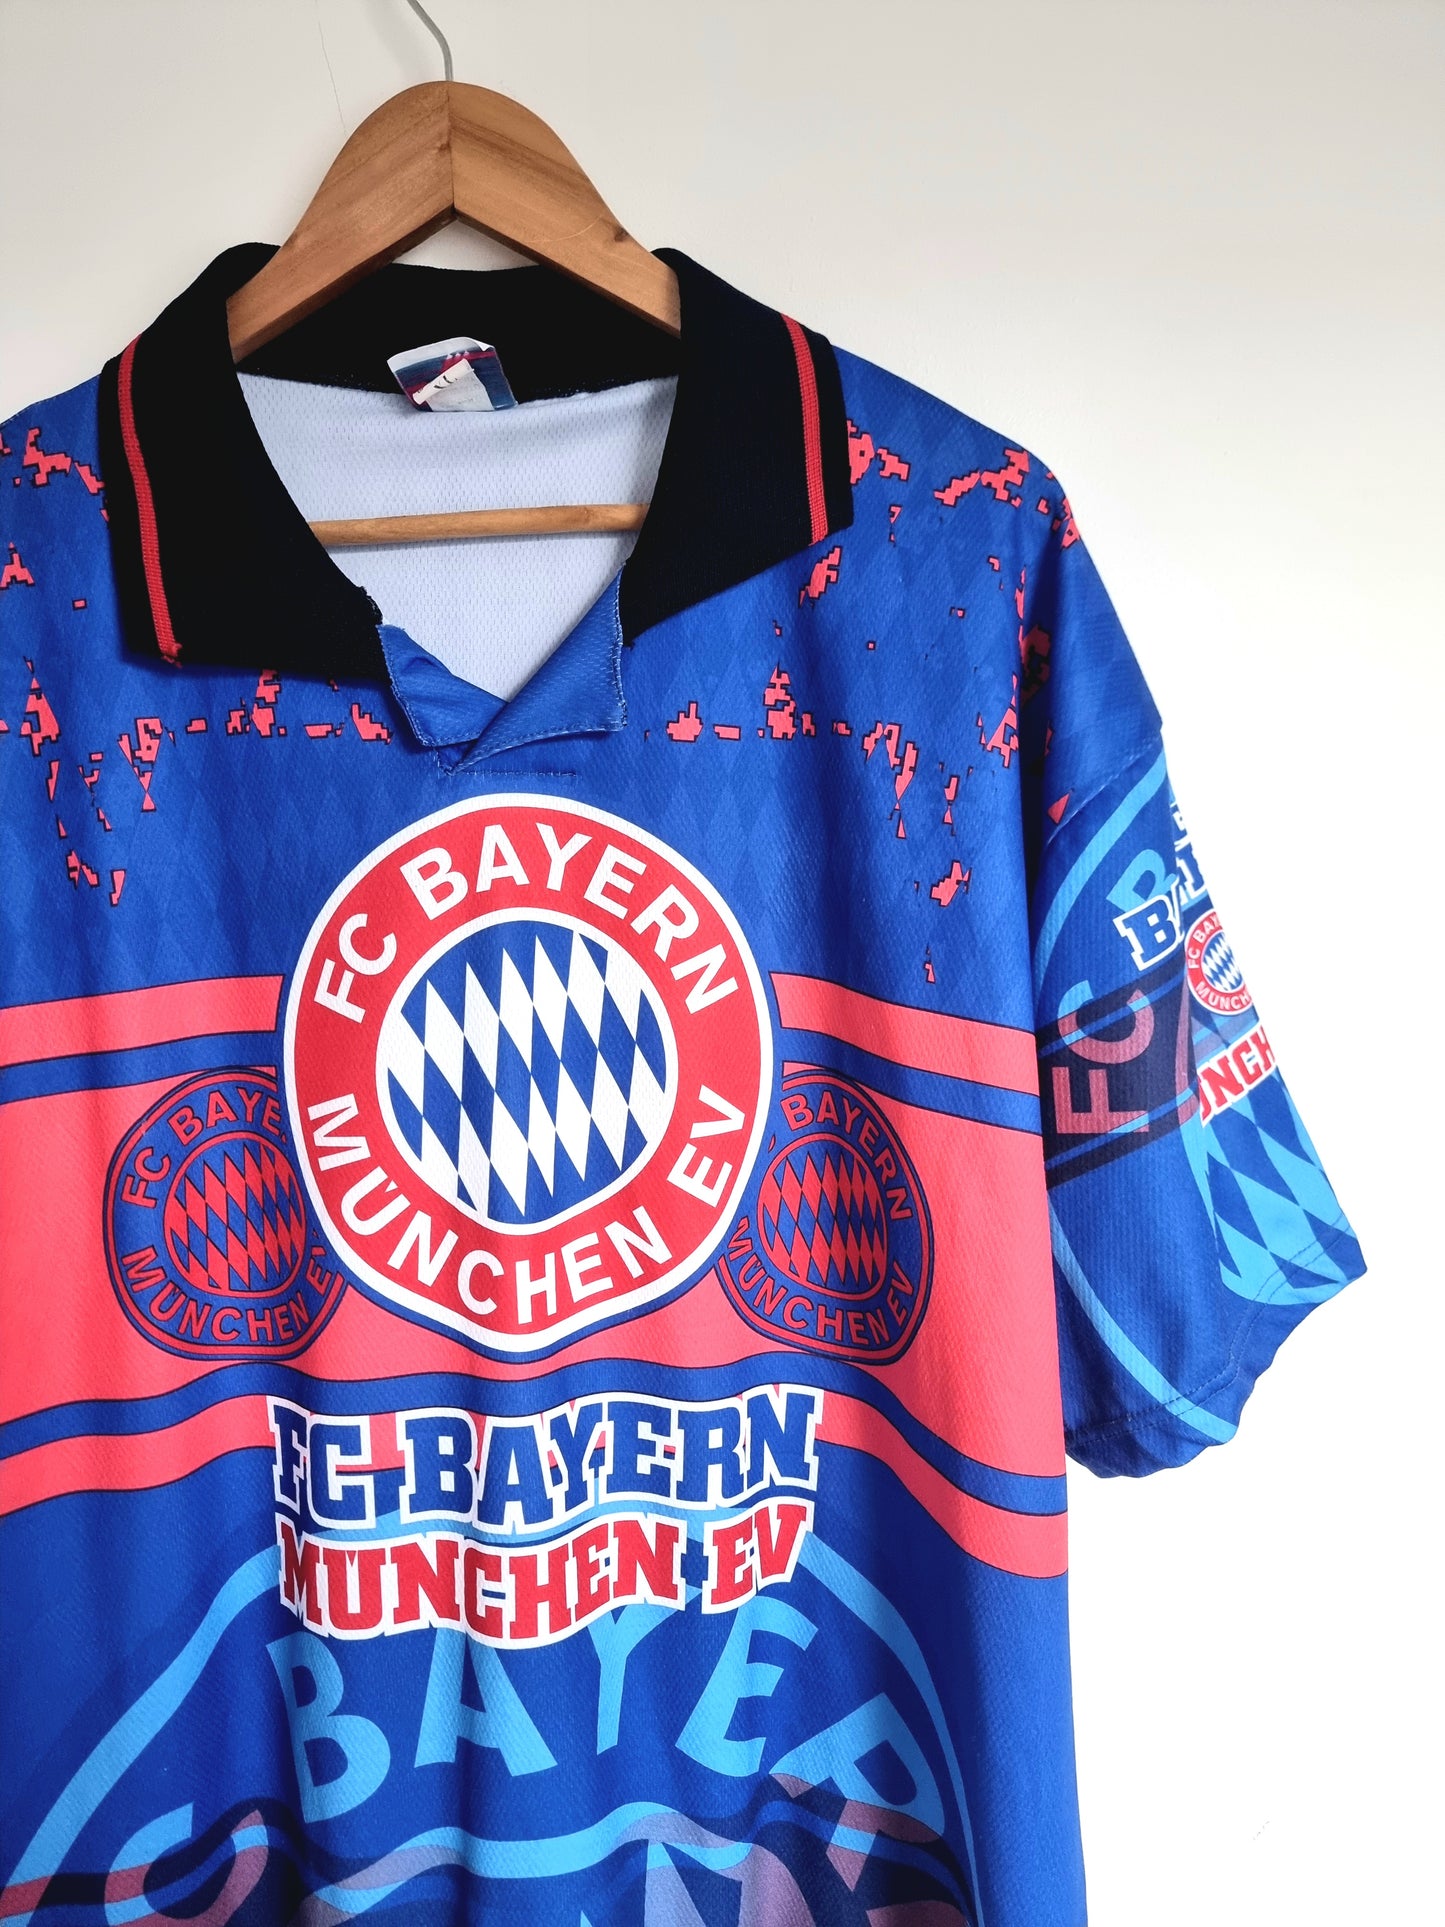 Pantaco Bayern Munich 90s Graphic Print Bootleg Shirt XL